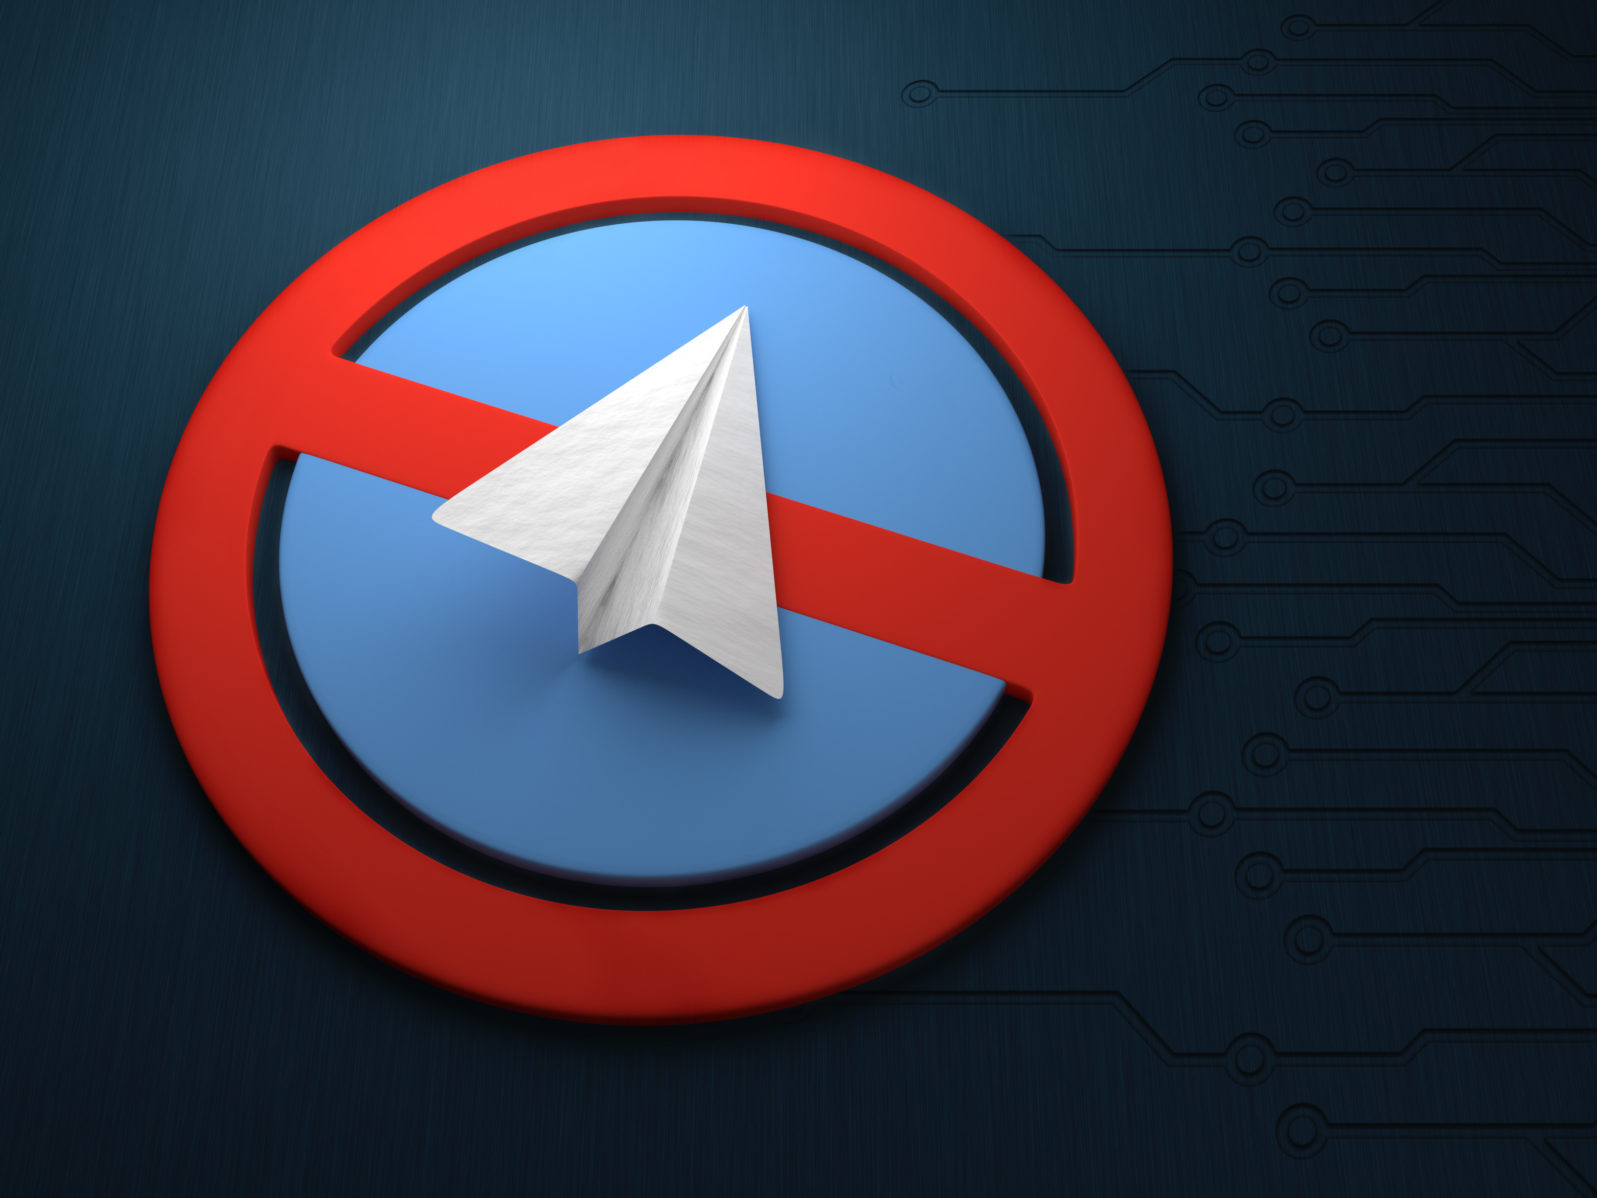 concept of blocking an application for messaging telegrams. Blocking telegram.